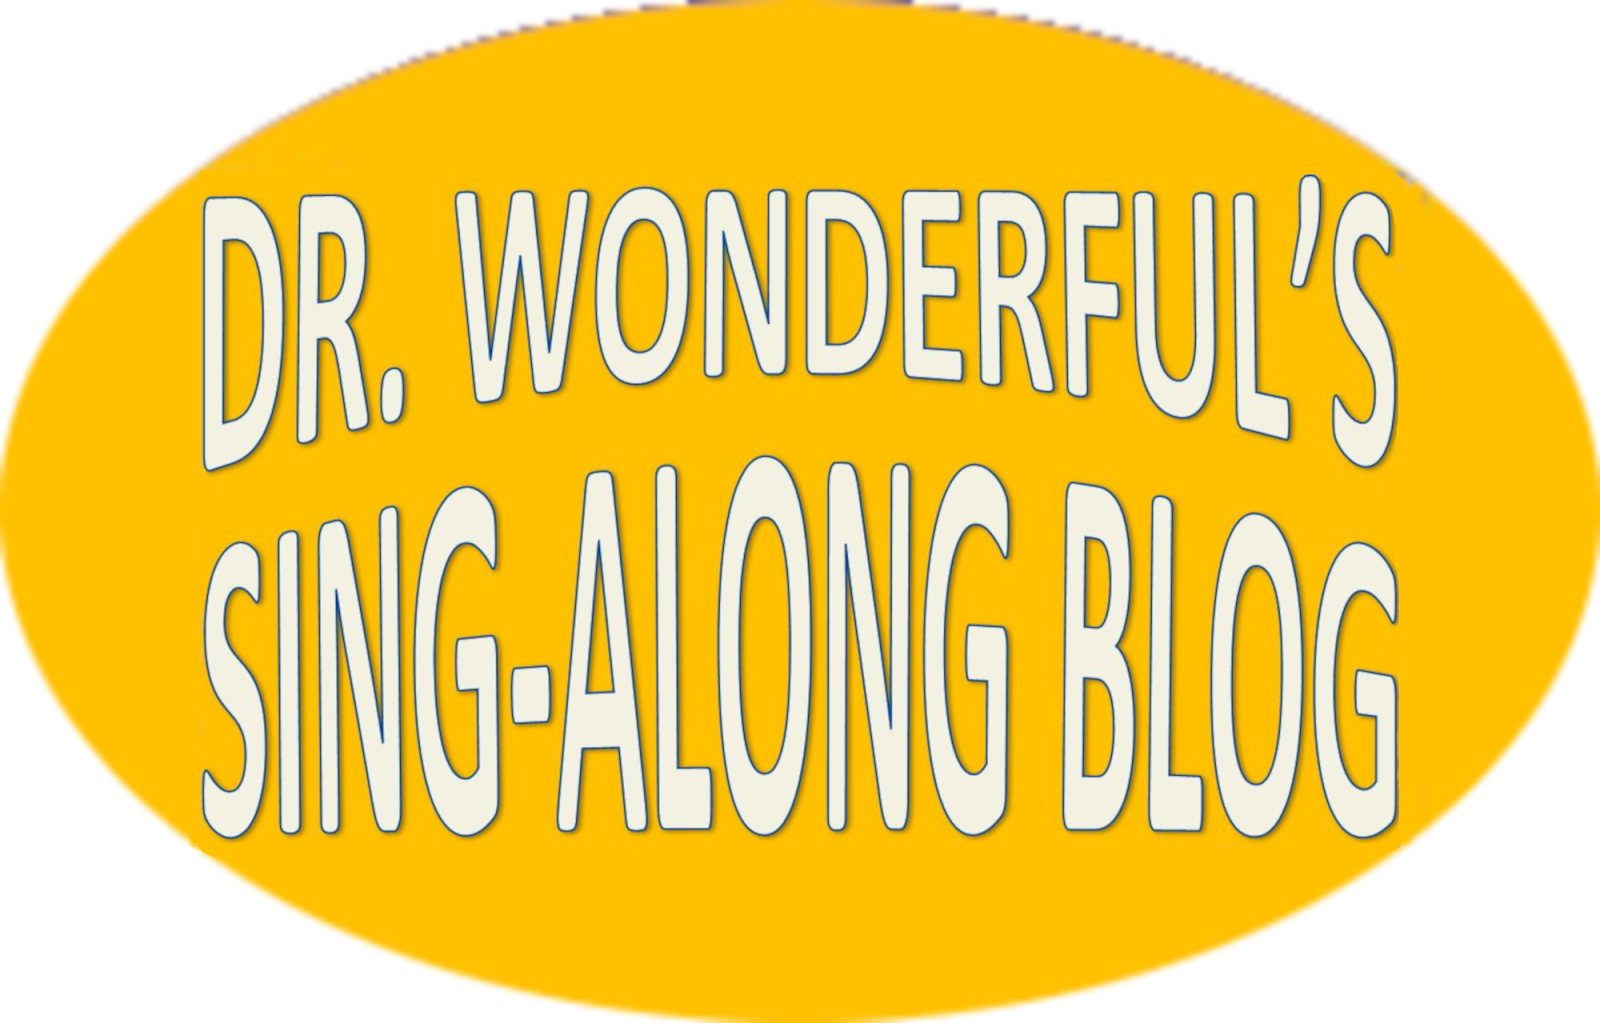 Dr Wonderful's Sing-Along Blog